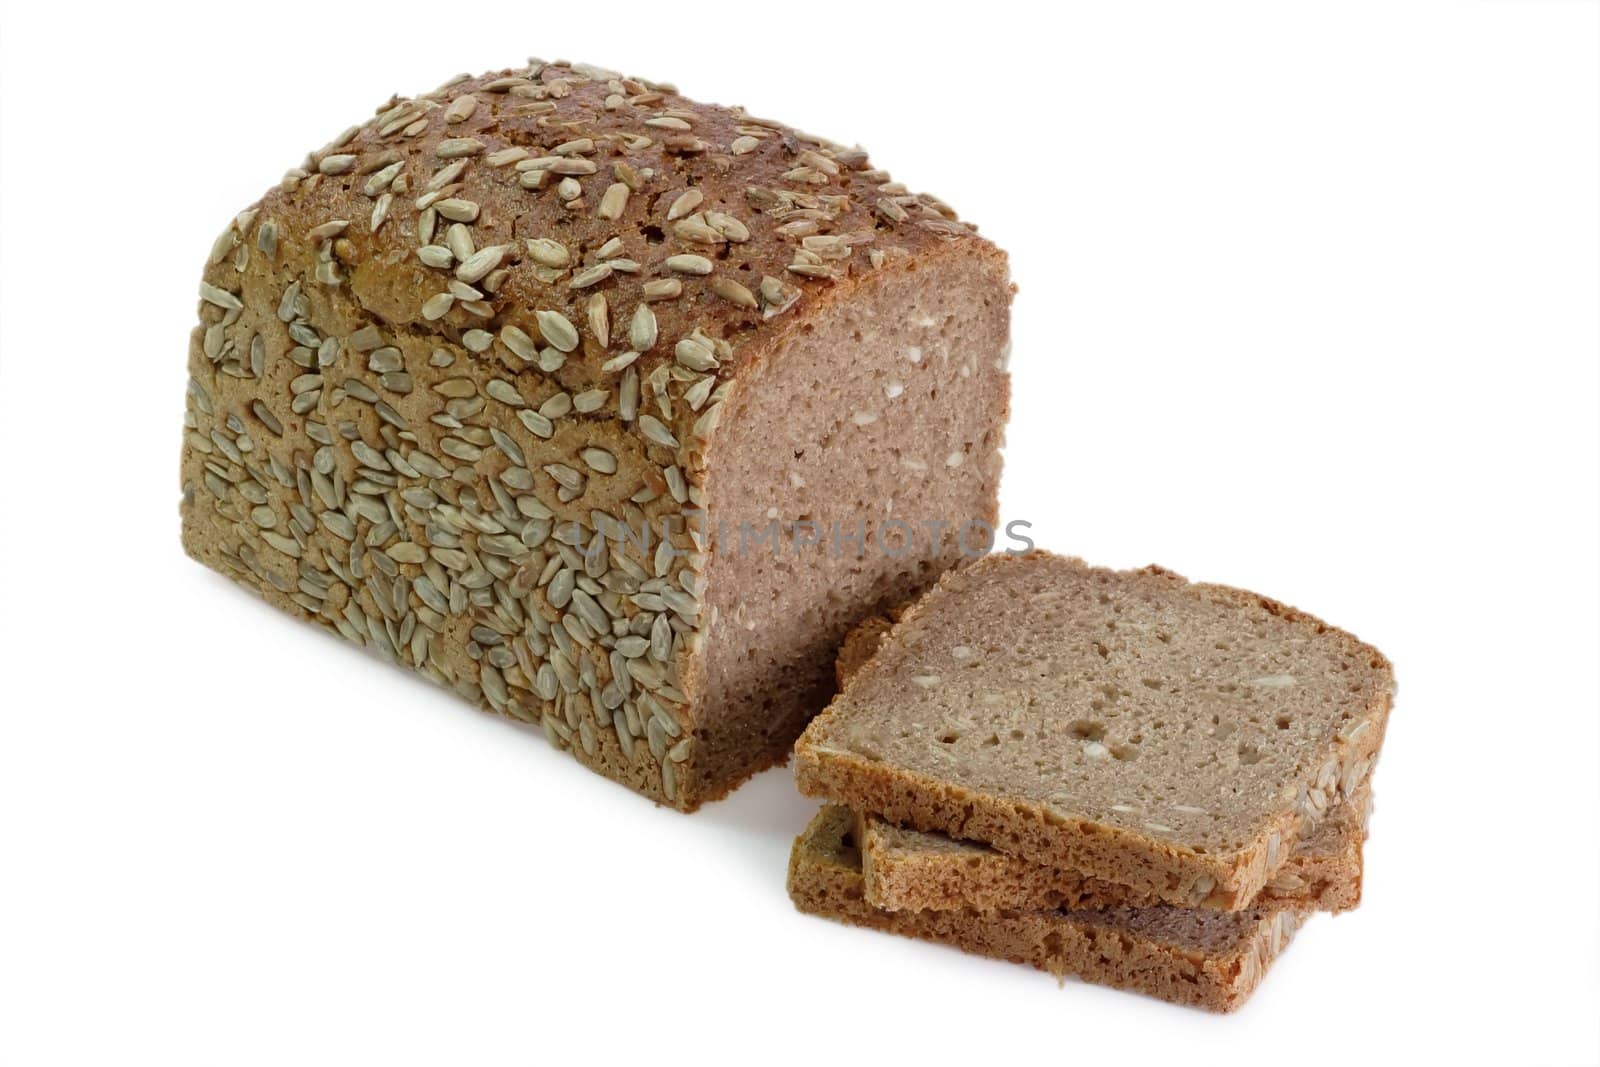 Sliced multi-grain-bread - isolated on white background